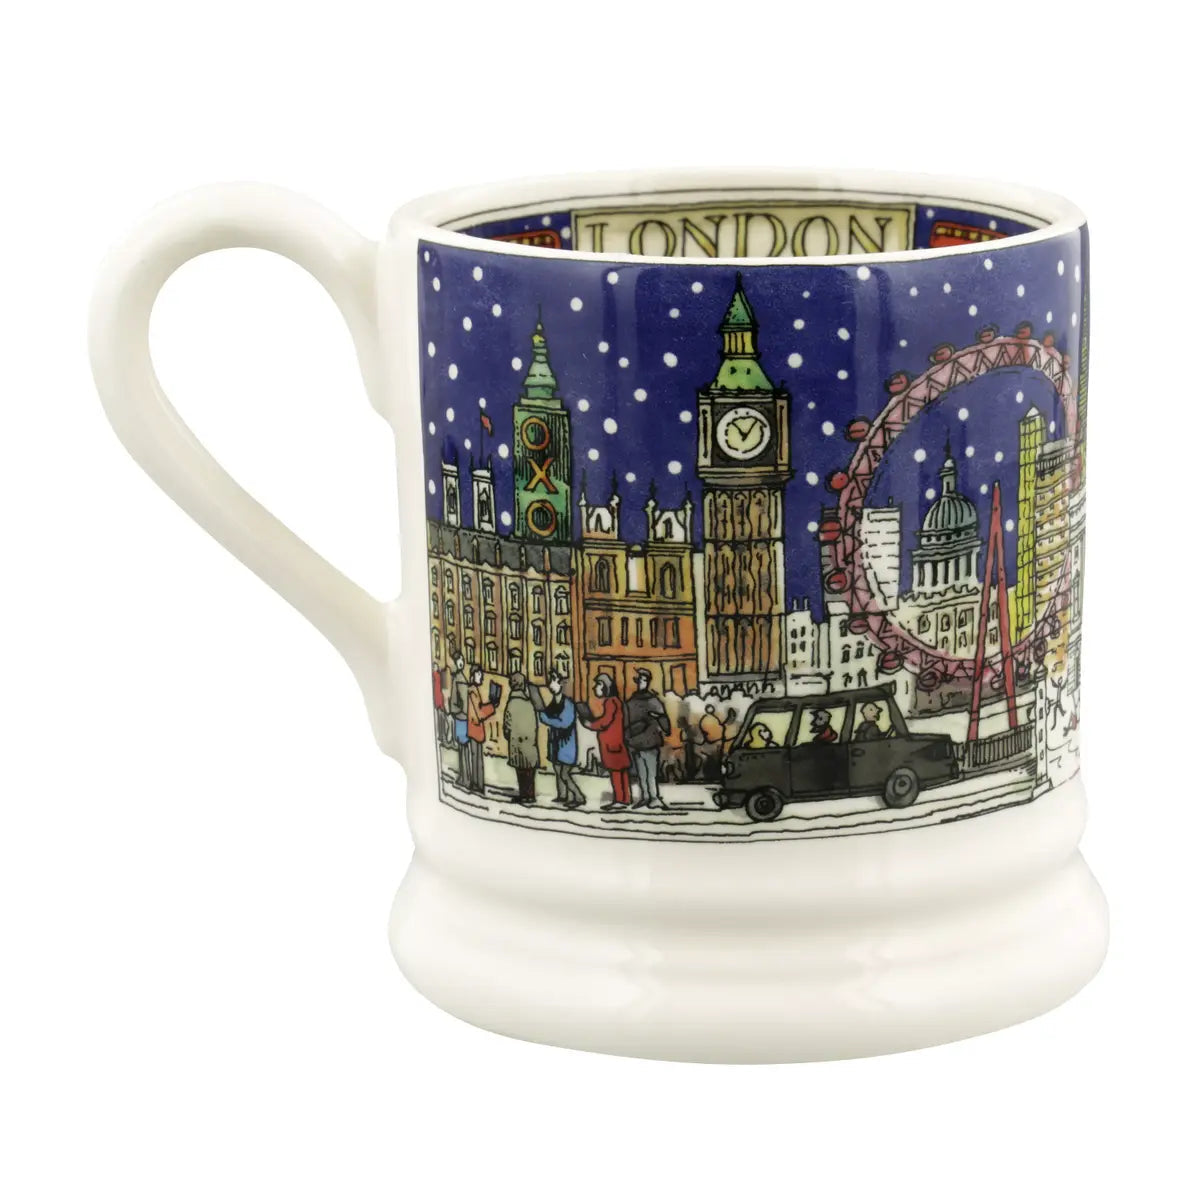 Emma Bridgewater London at Christmas 1/2 Pint Mug